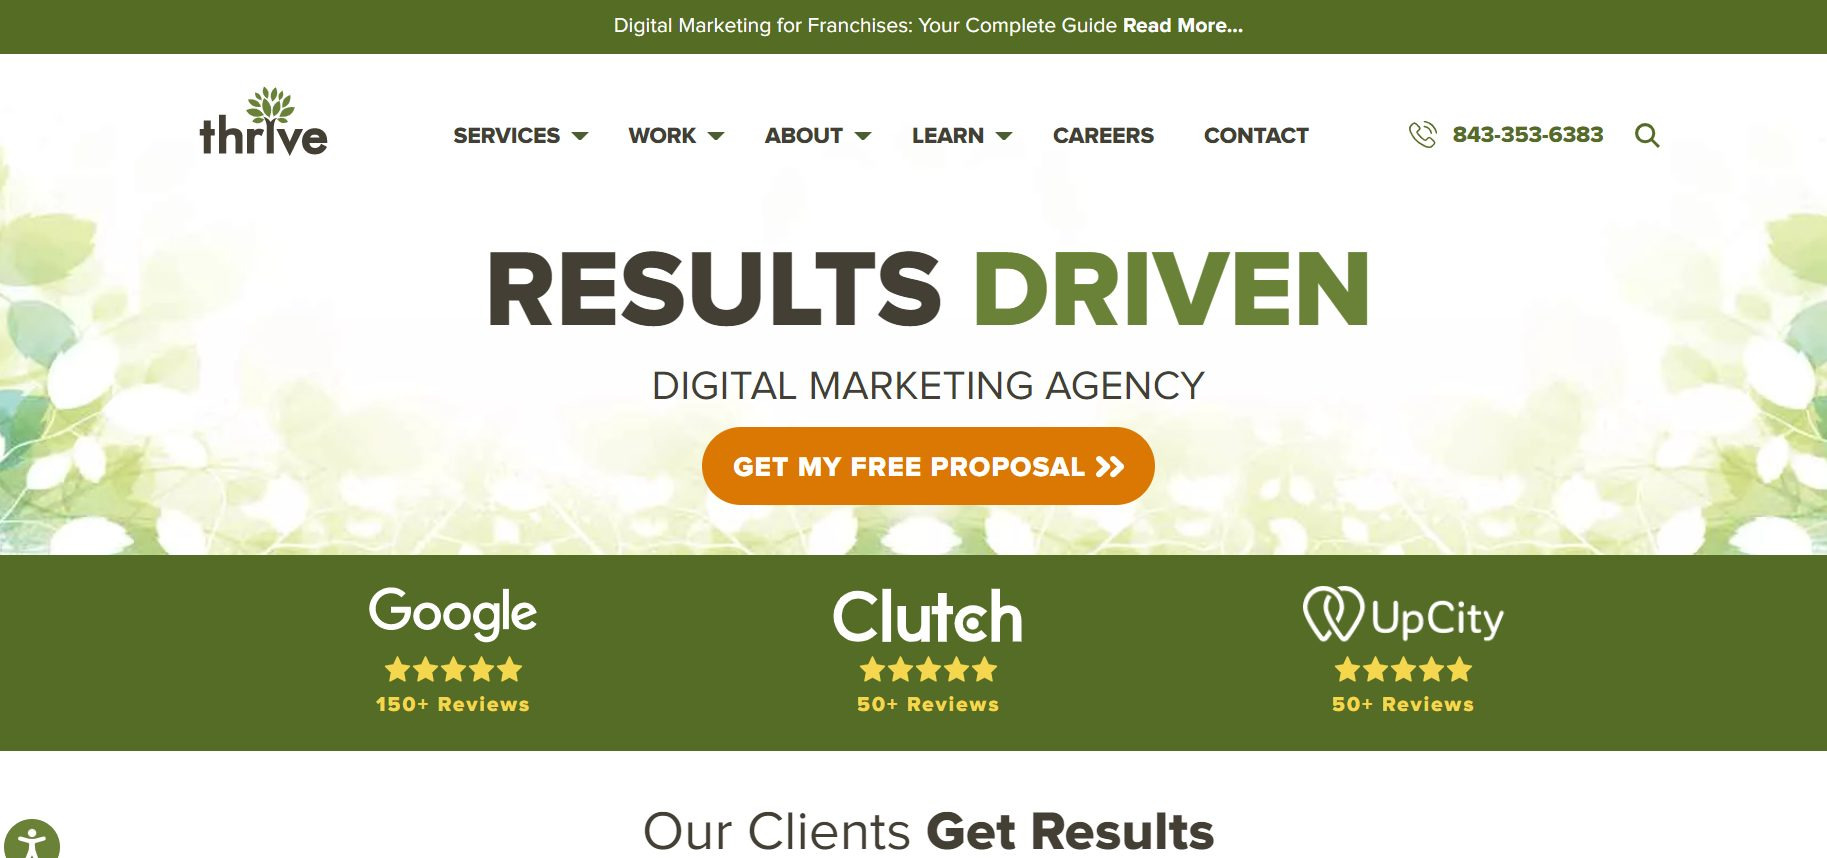 Thrive Digital Marketing Agency